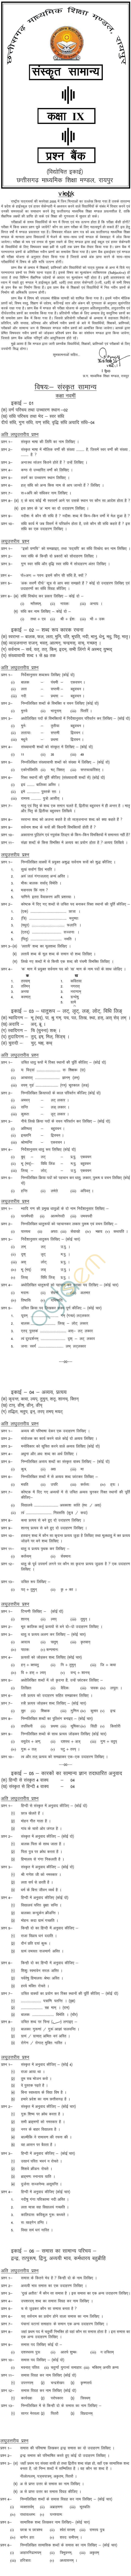 Chhattisgarh Board Class 09 Question Bank - Sanskrit